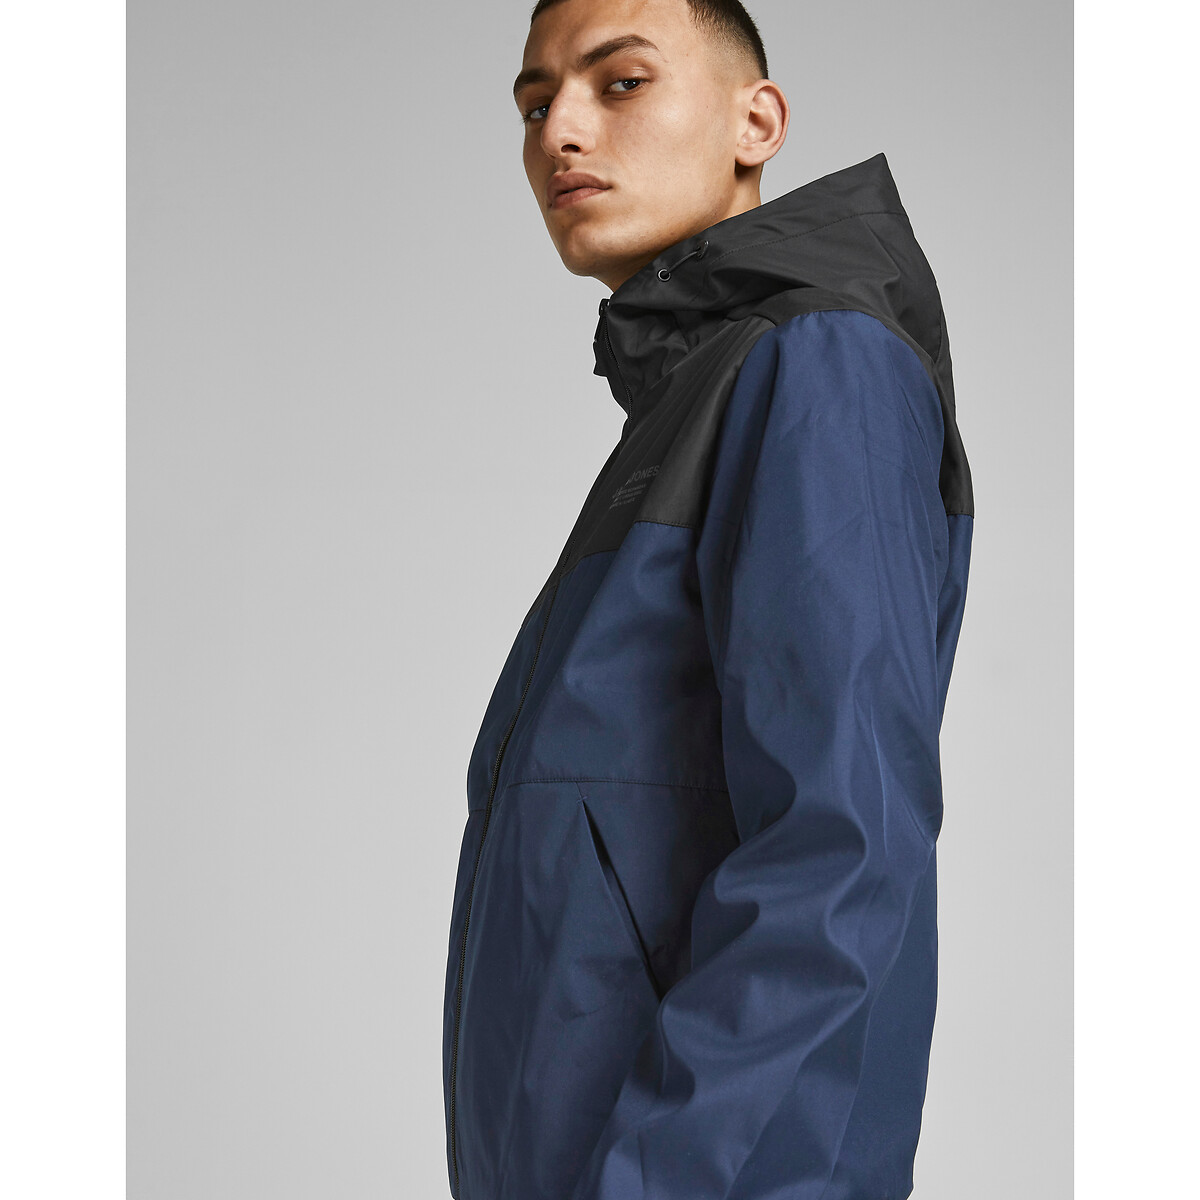 Куртка LaRedoute На молнии с капюшоном Seam L синий, размер L - фото 2